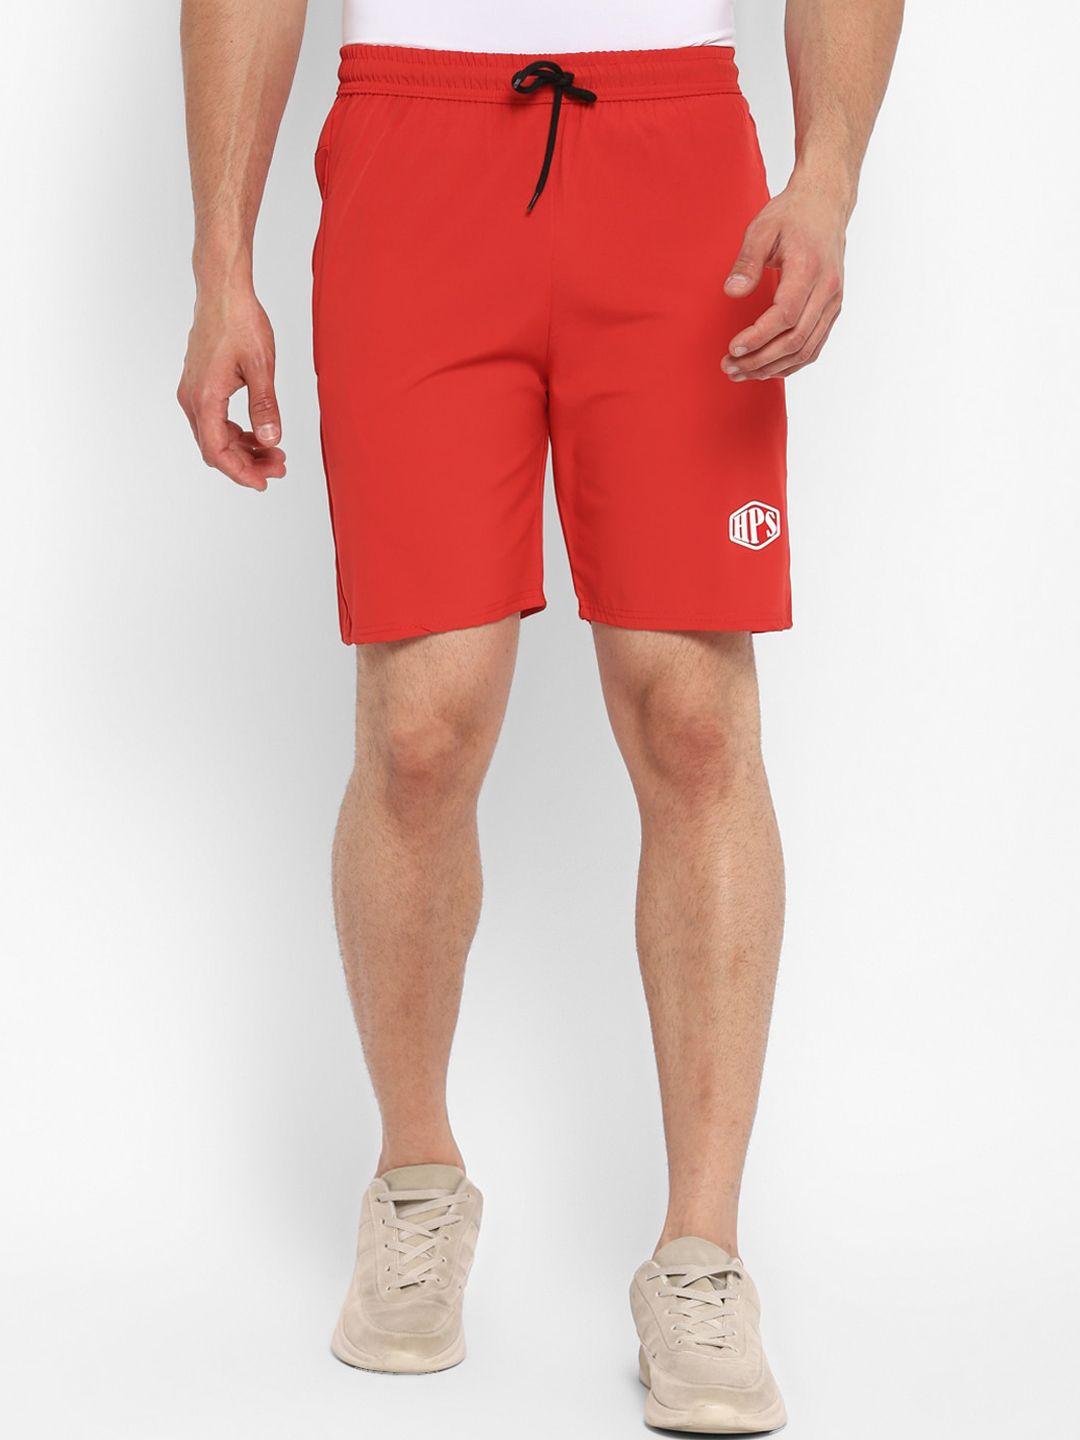 hps-sports-men-red-running-shorts